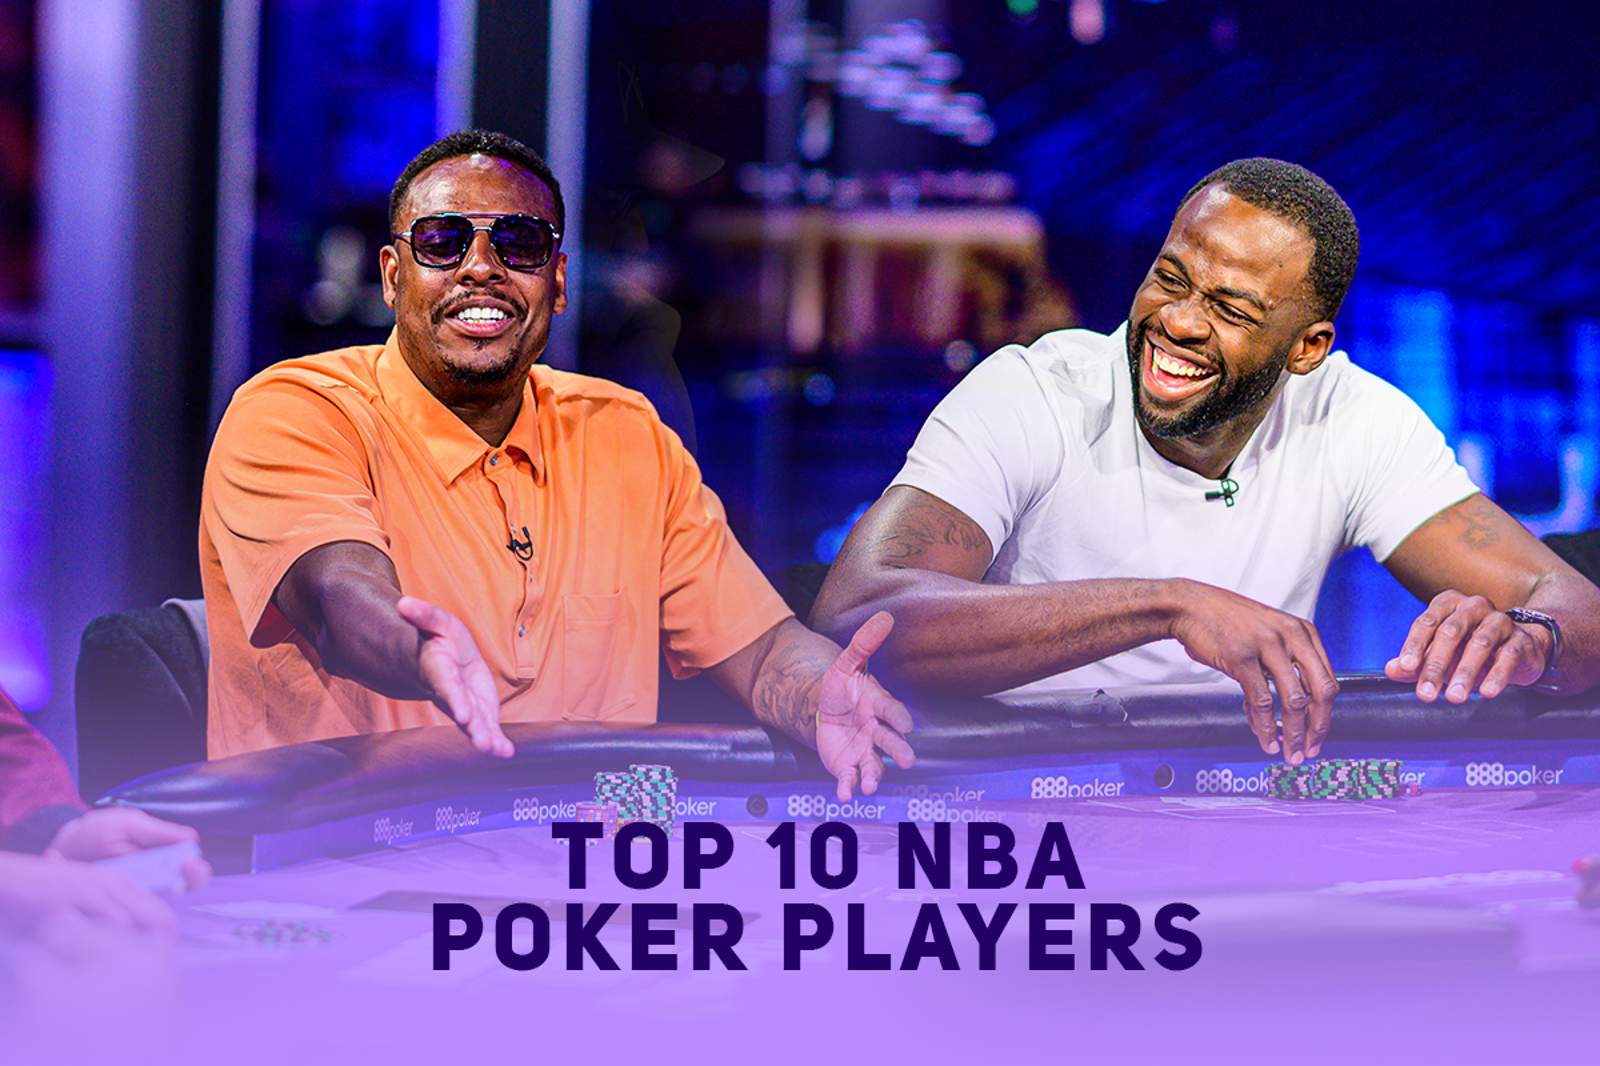 Top 10 Star NBA Poker Players